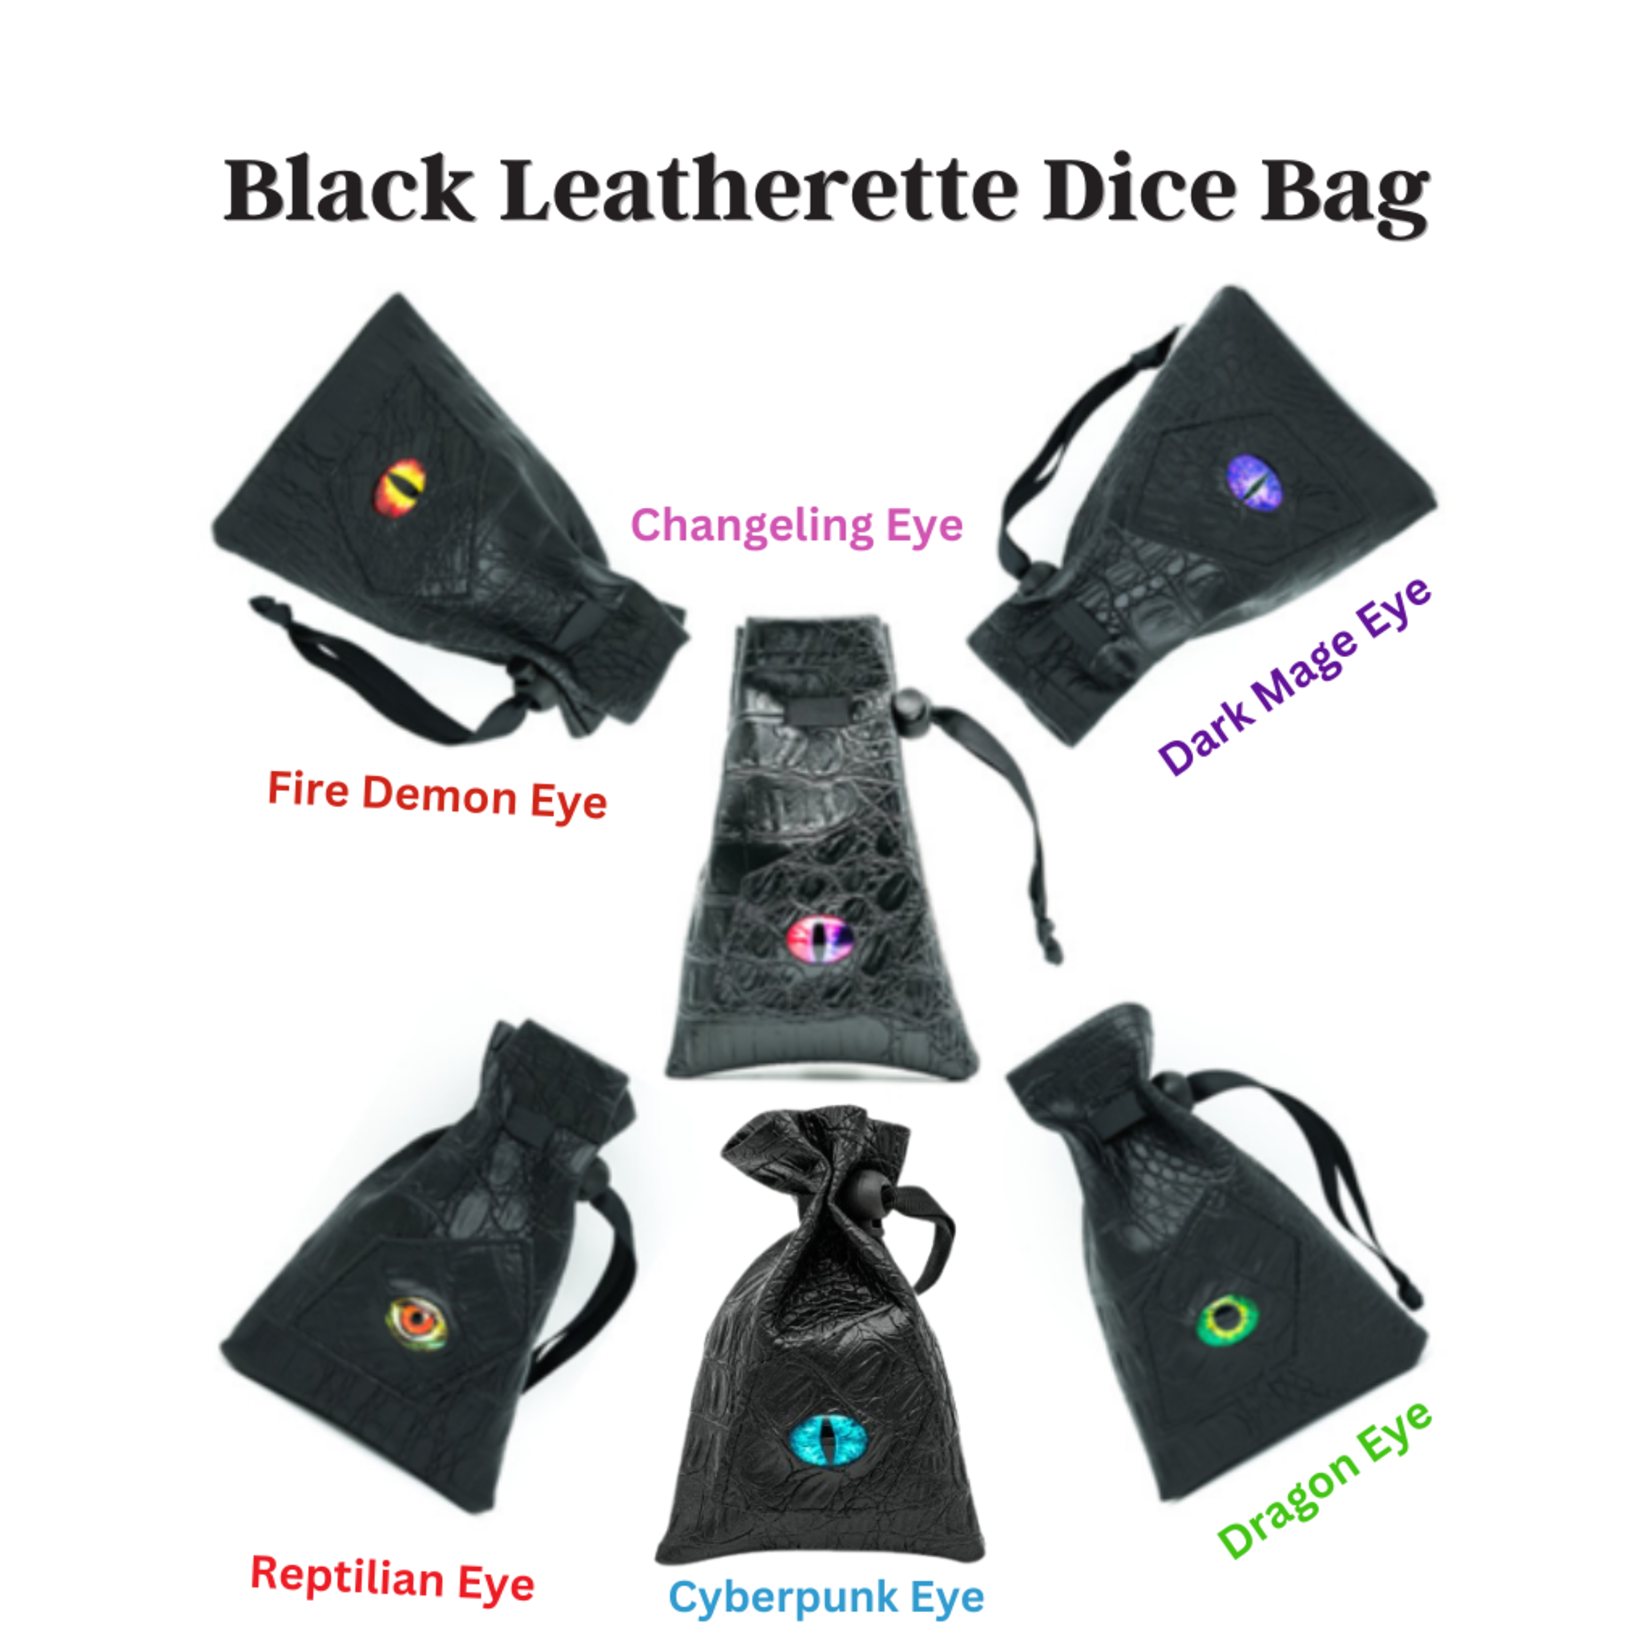 Black Leatherette Dice Bag